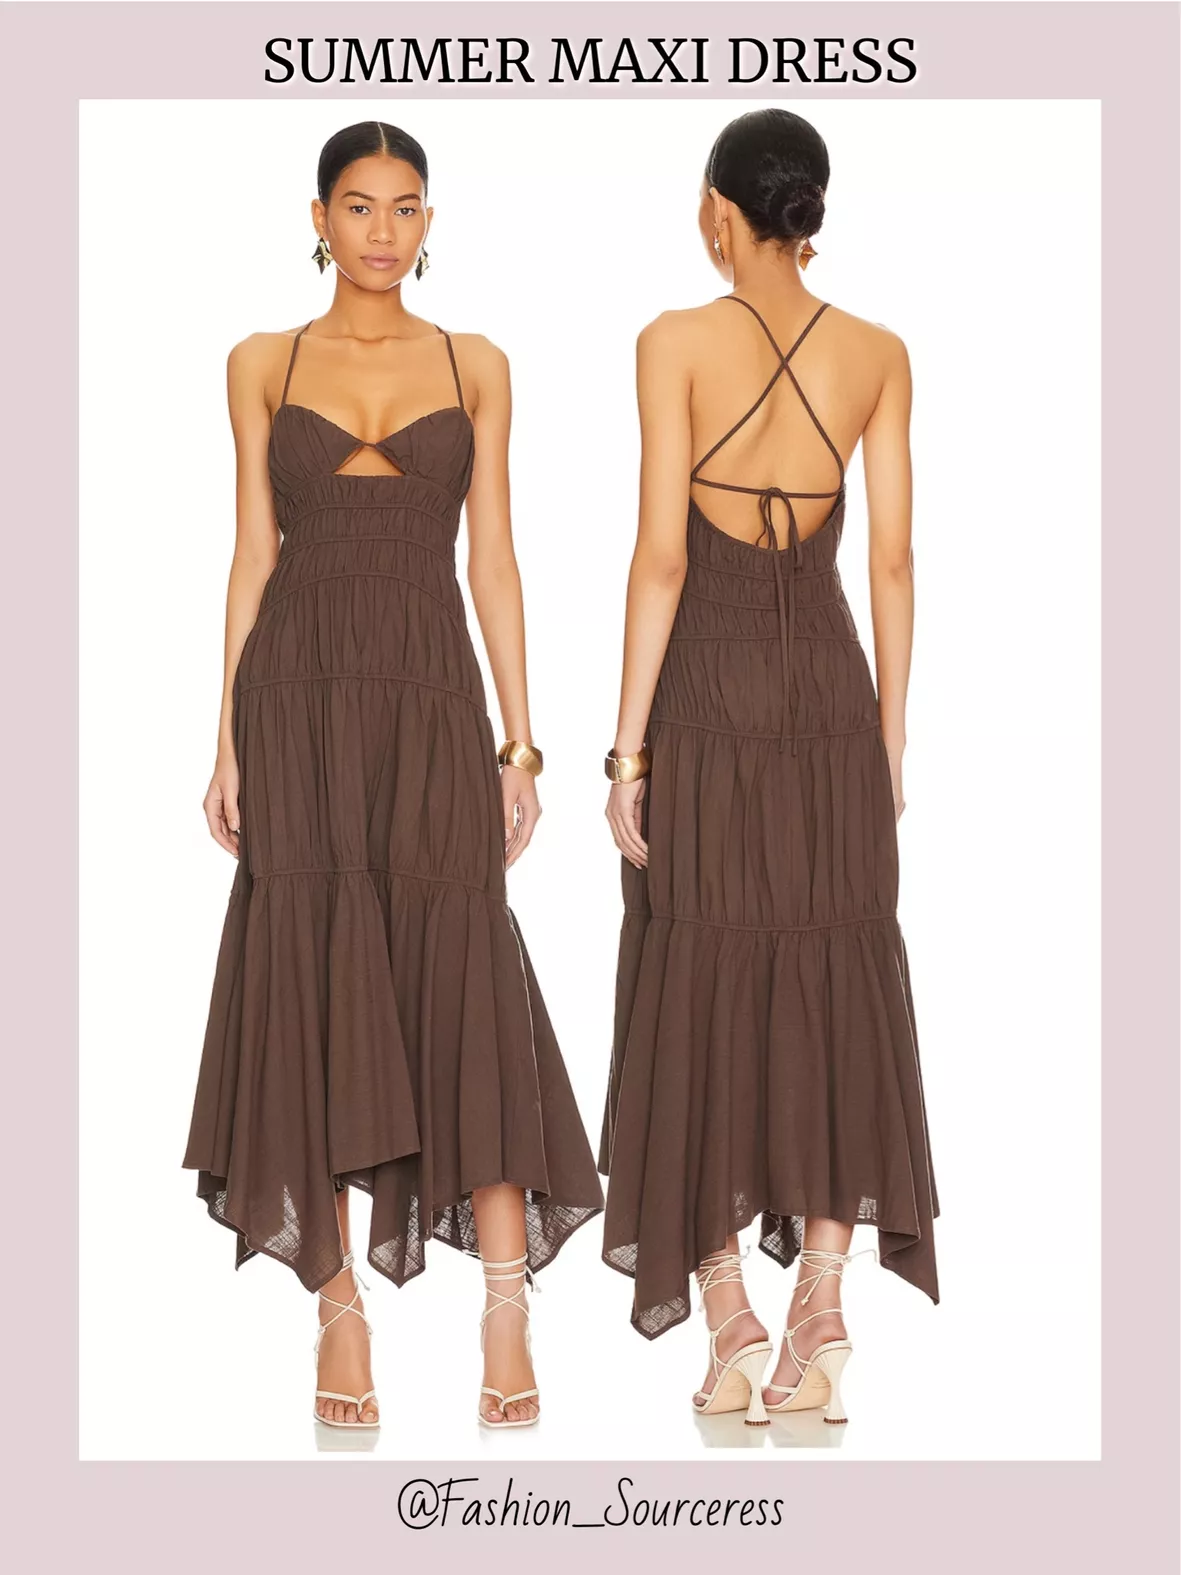 Elerie Maxi Dress - Strapless Linen Dress in Chocolate